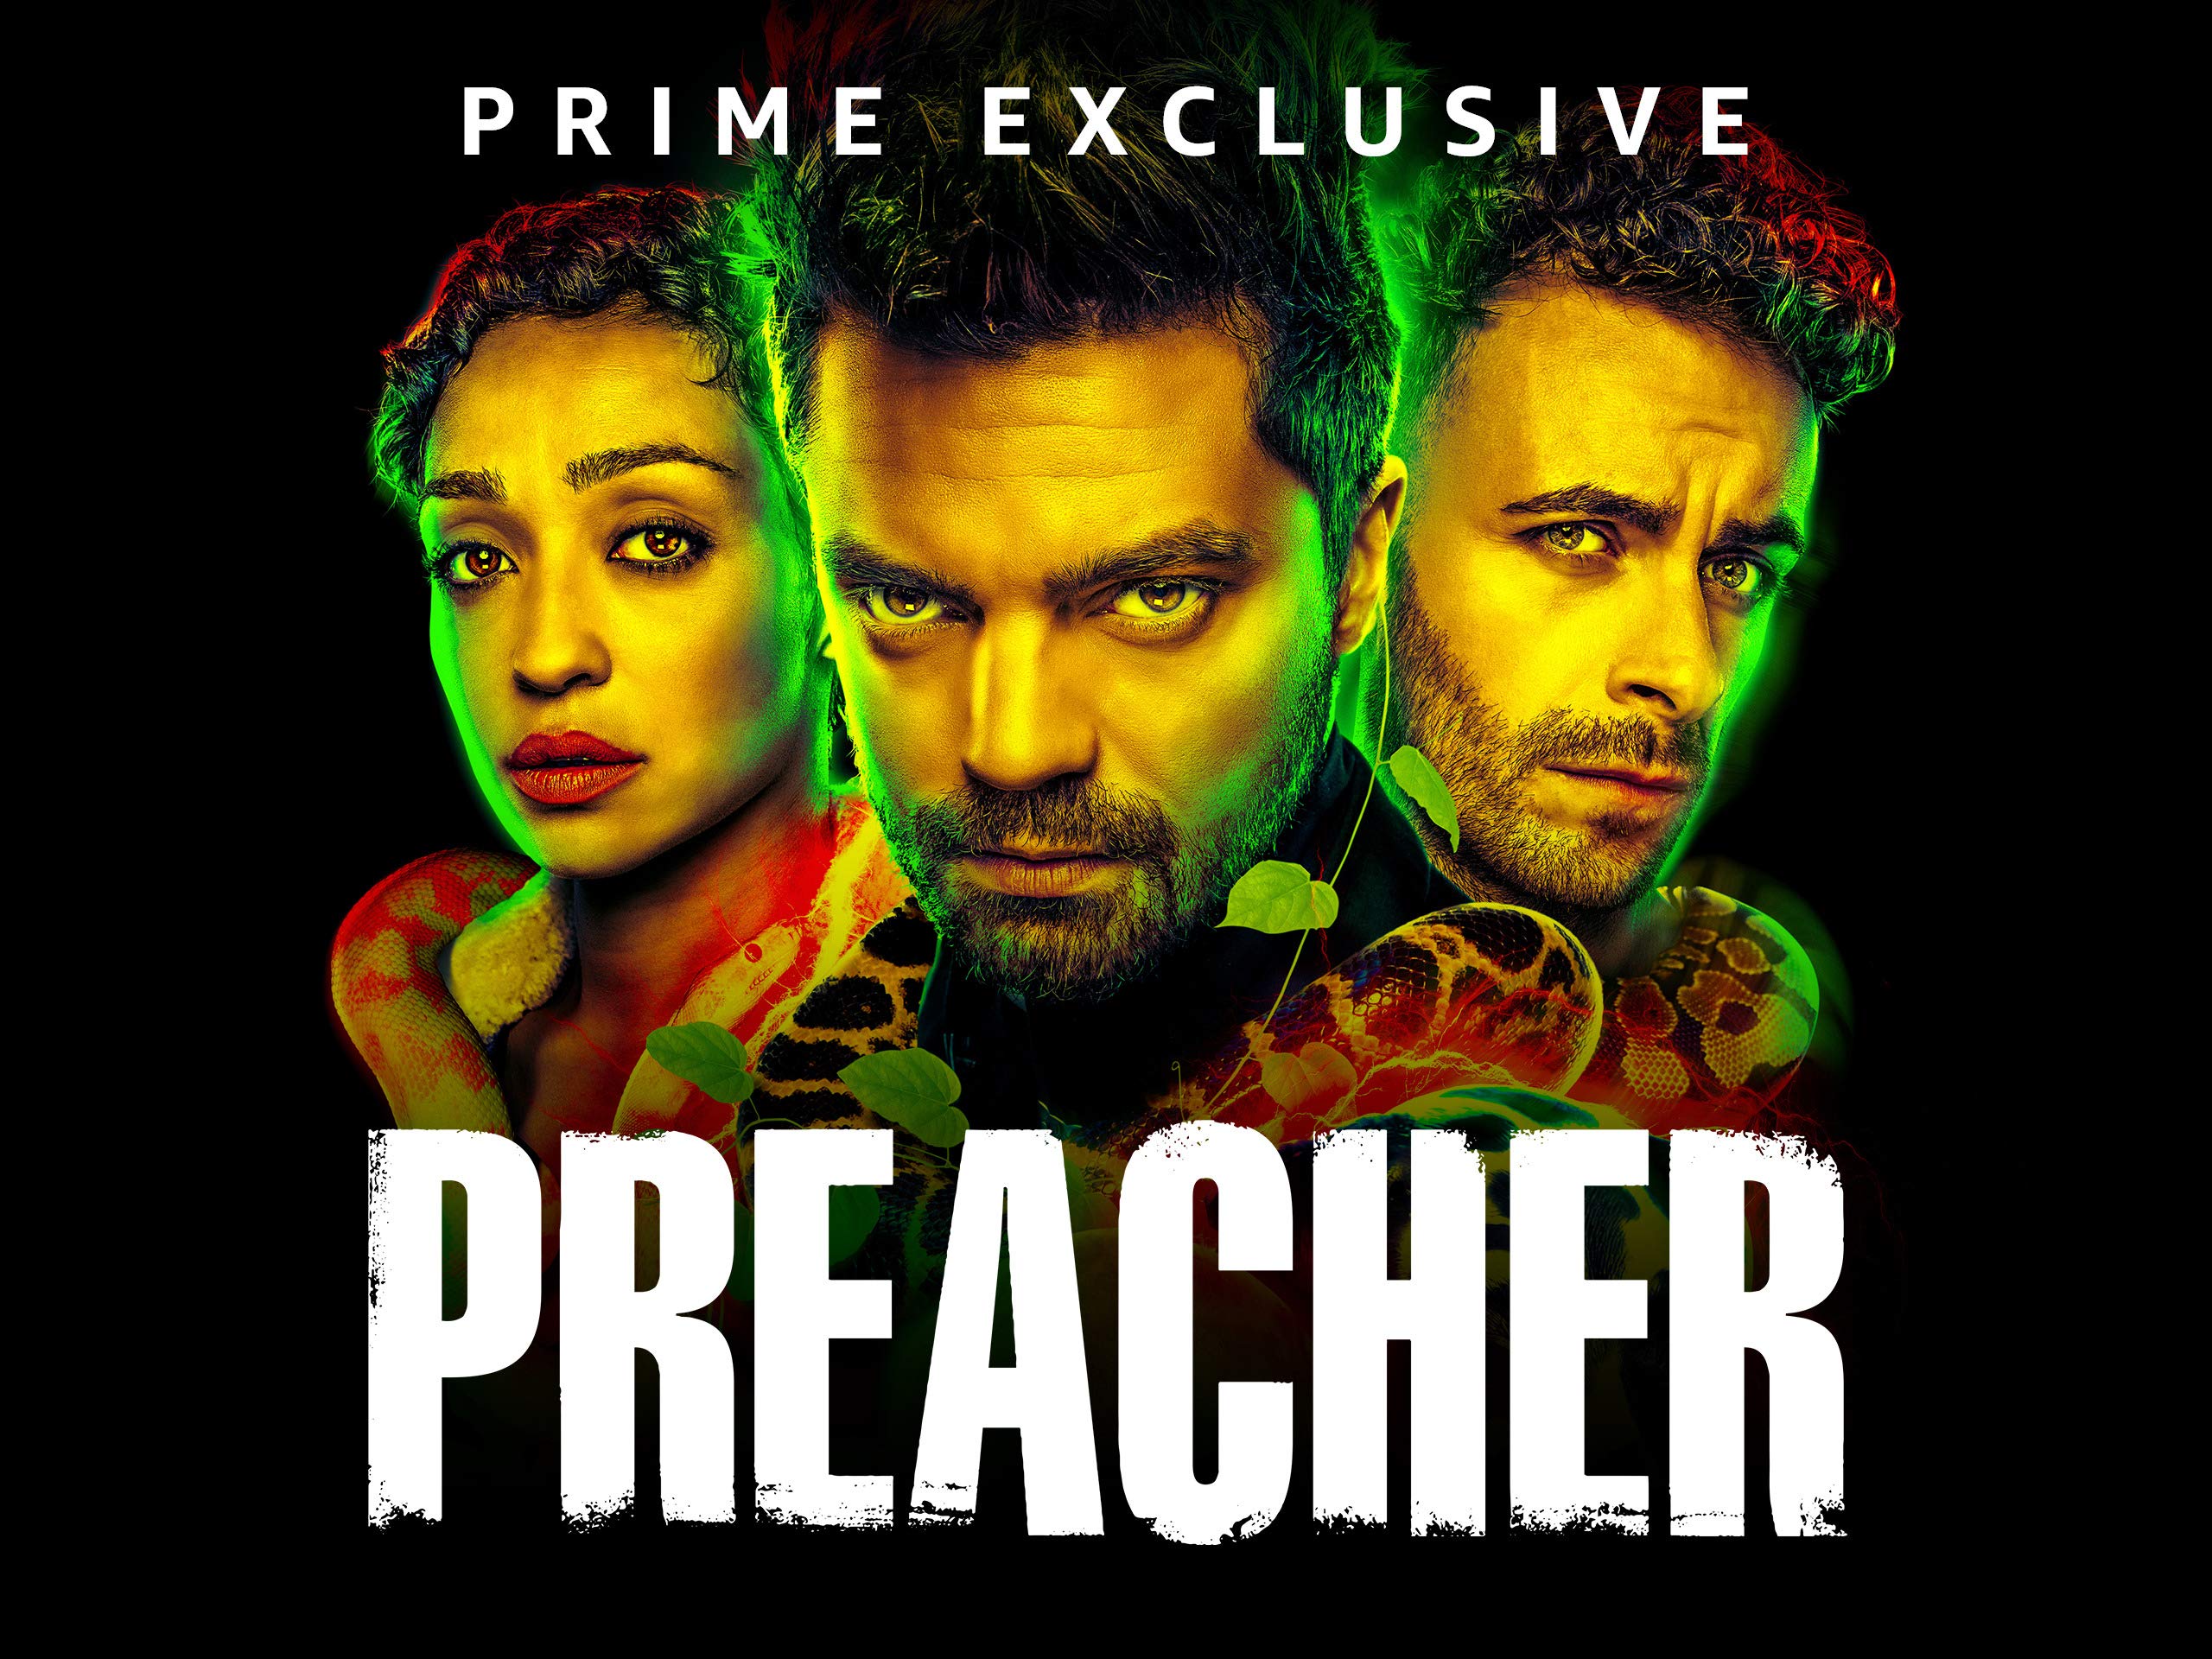 TV Show Preacher HD Wallpaper | Background Image